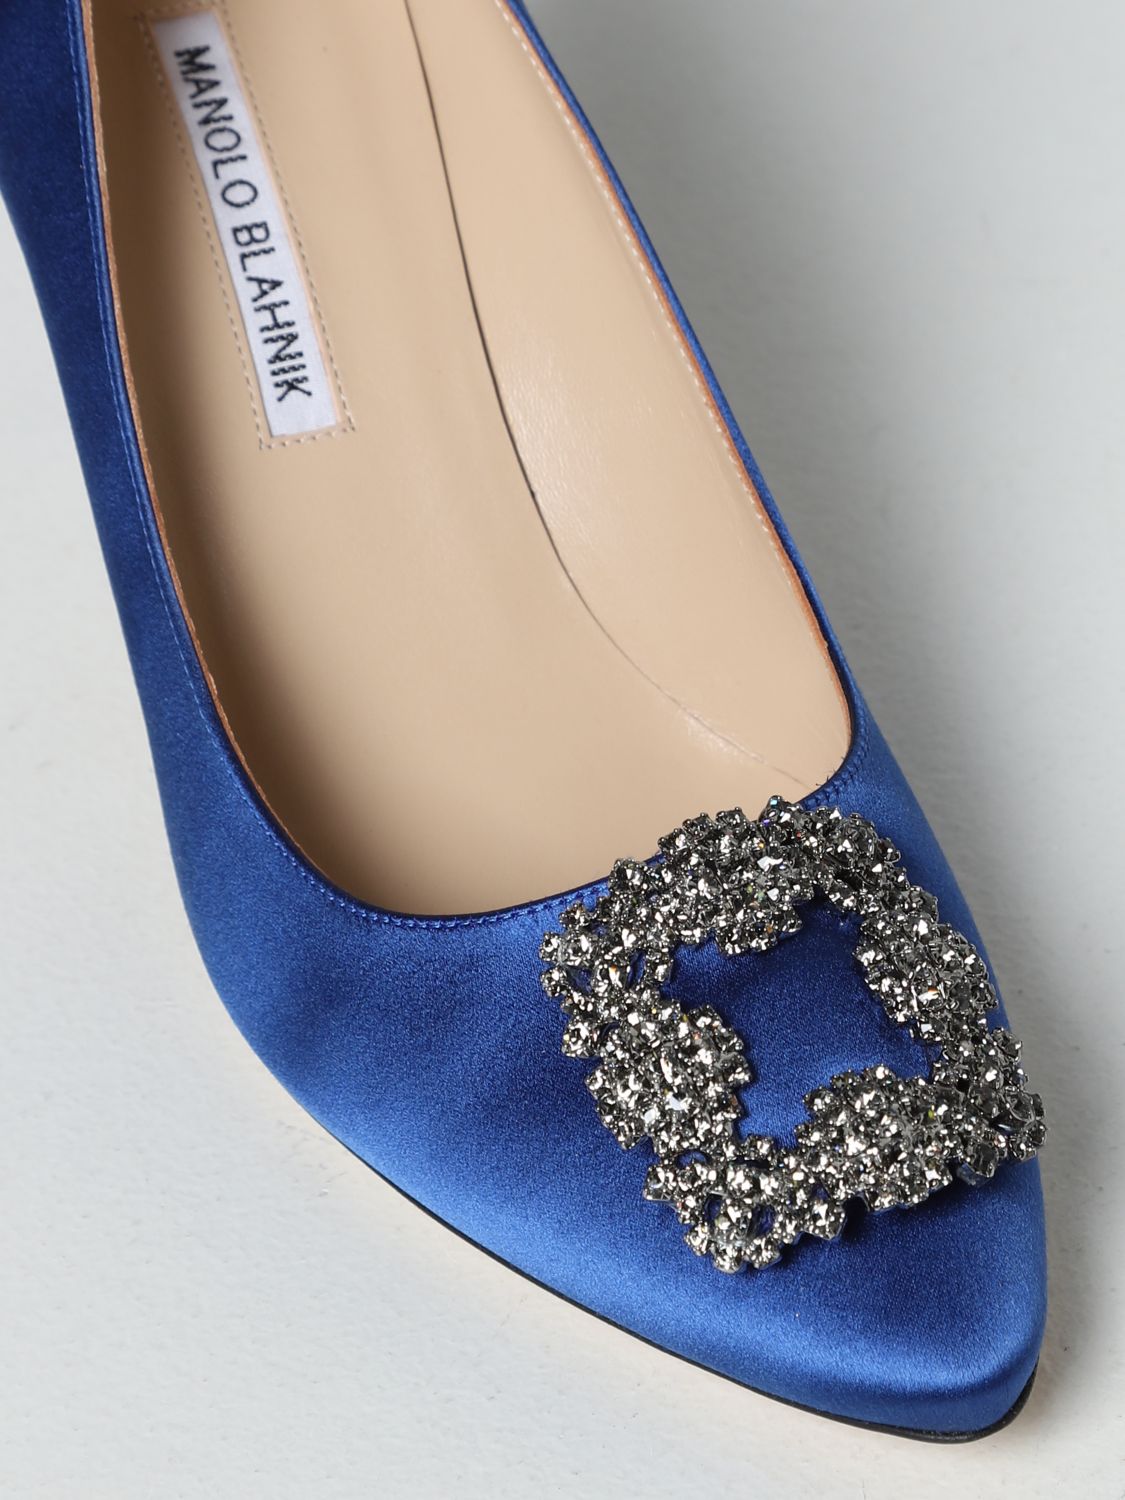 MANOLO BLAHNIK: Zapatos salón para mujer, Blue | Zapatos De SalÓN Manolo Blahnik 9XX06620053 en línea